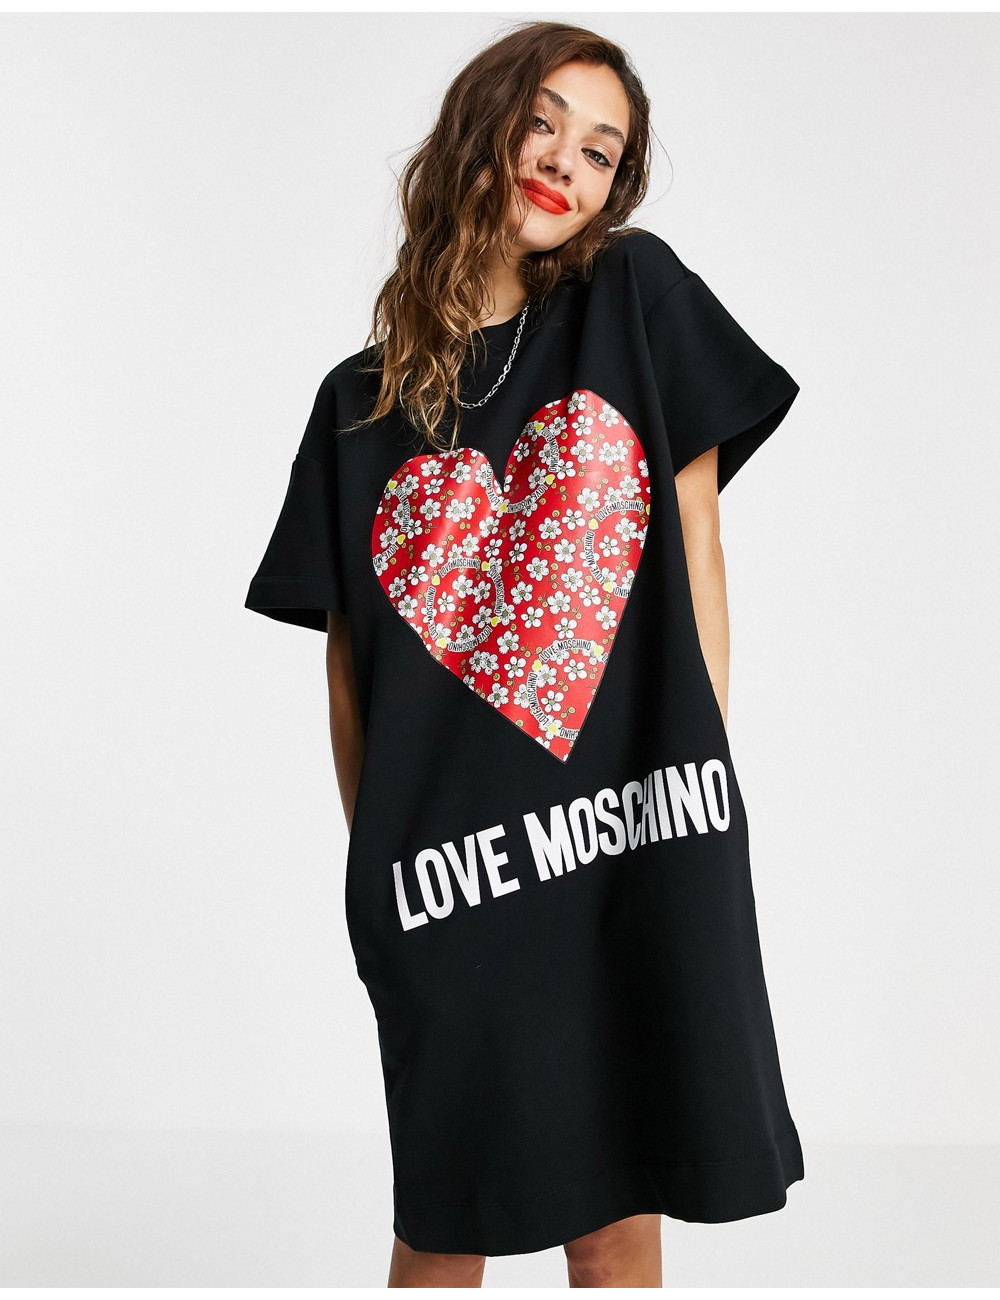 Love Moschino heart logo...